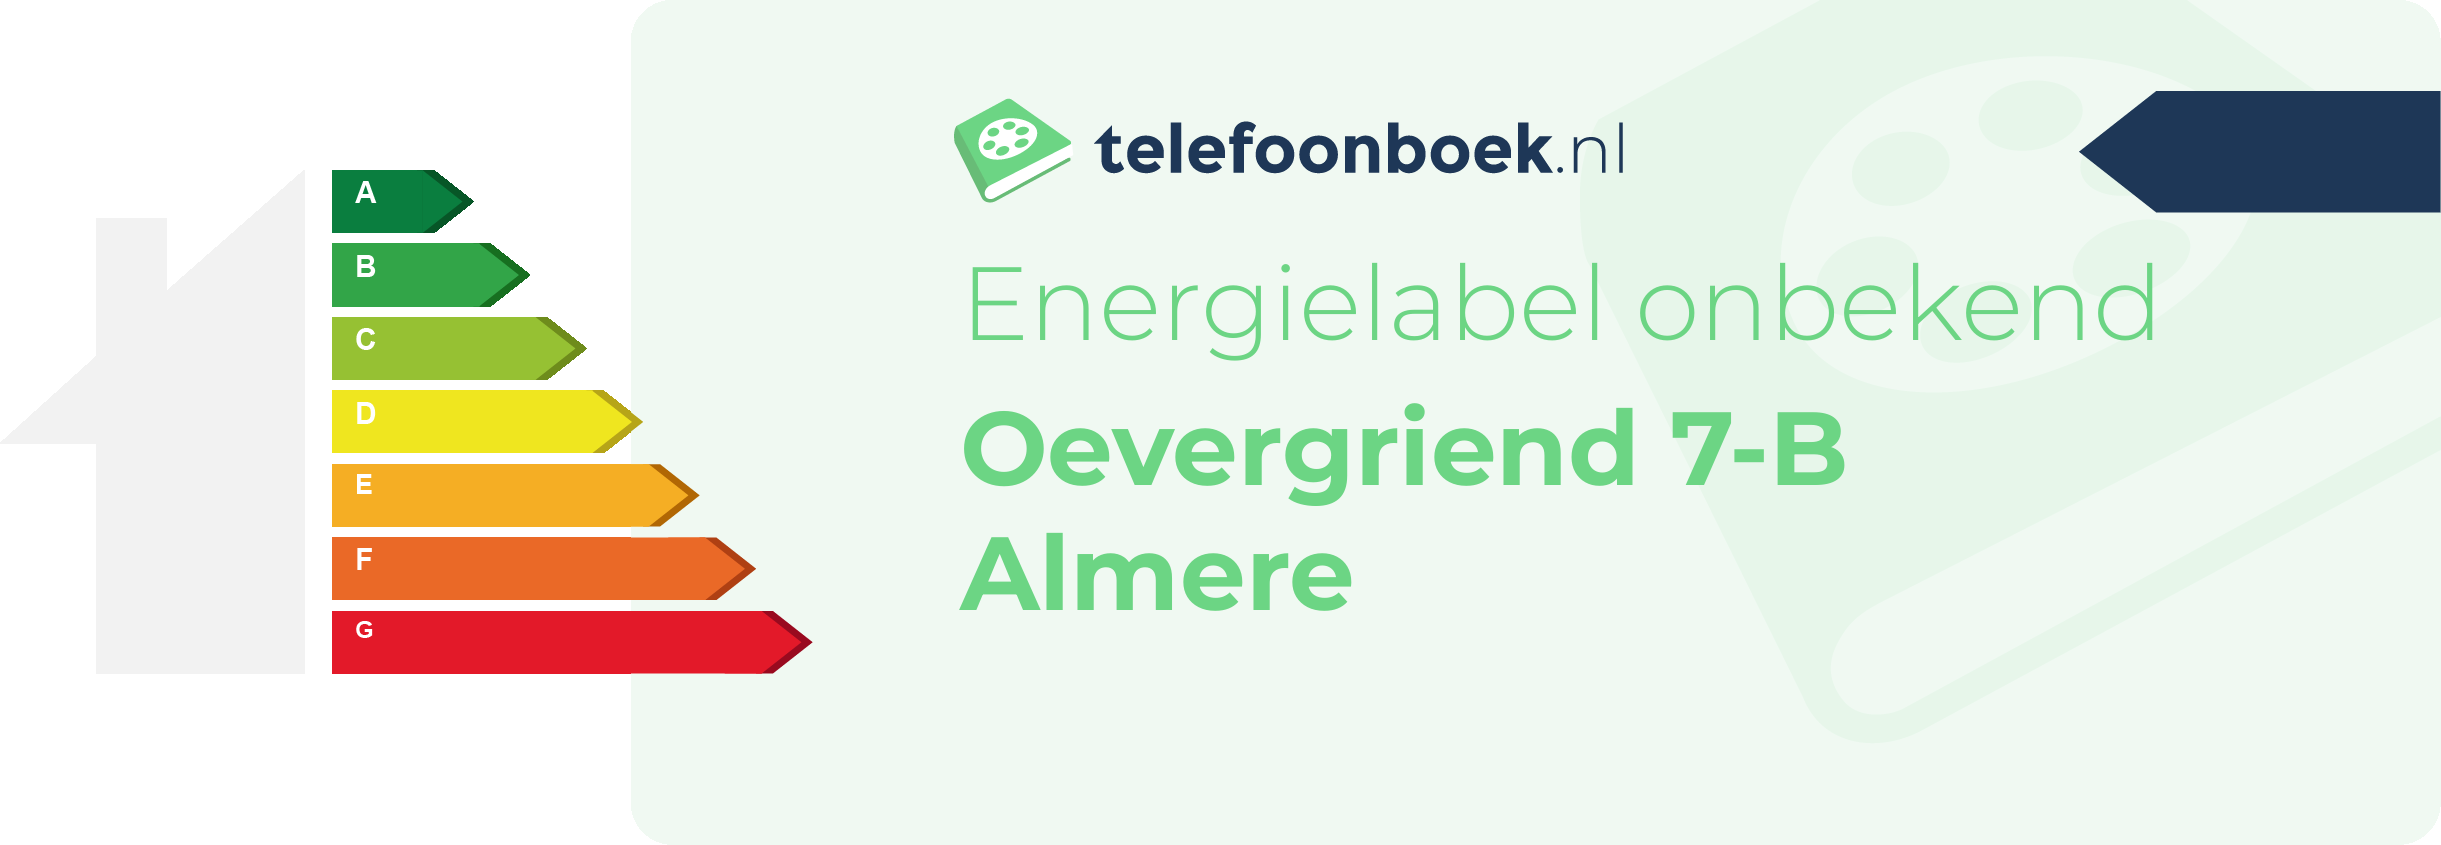 Energielabel Oevergriend 7-B Almere